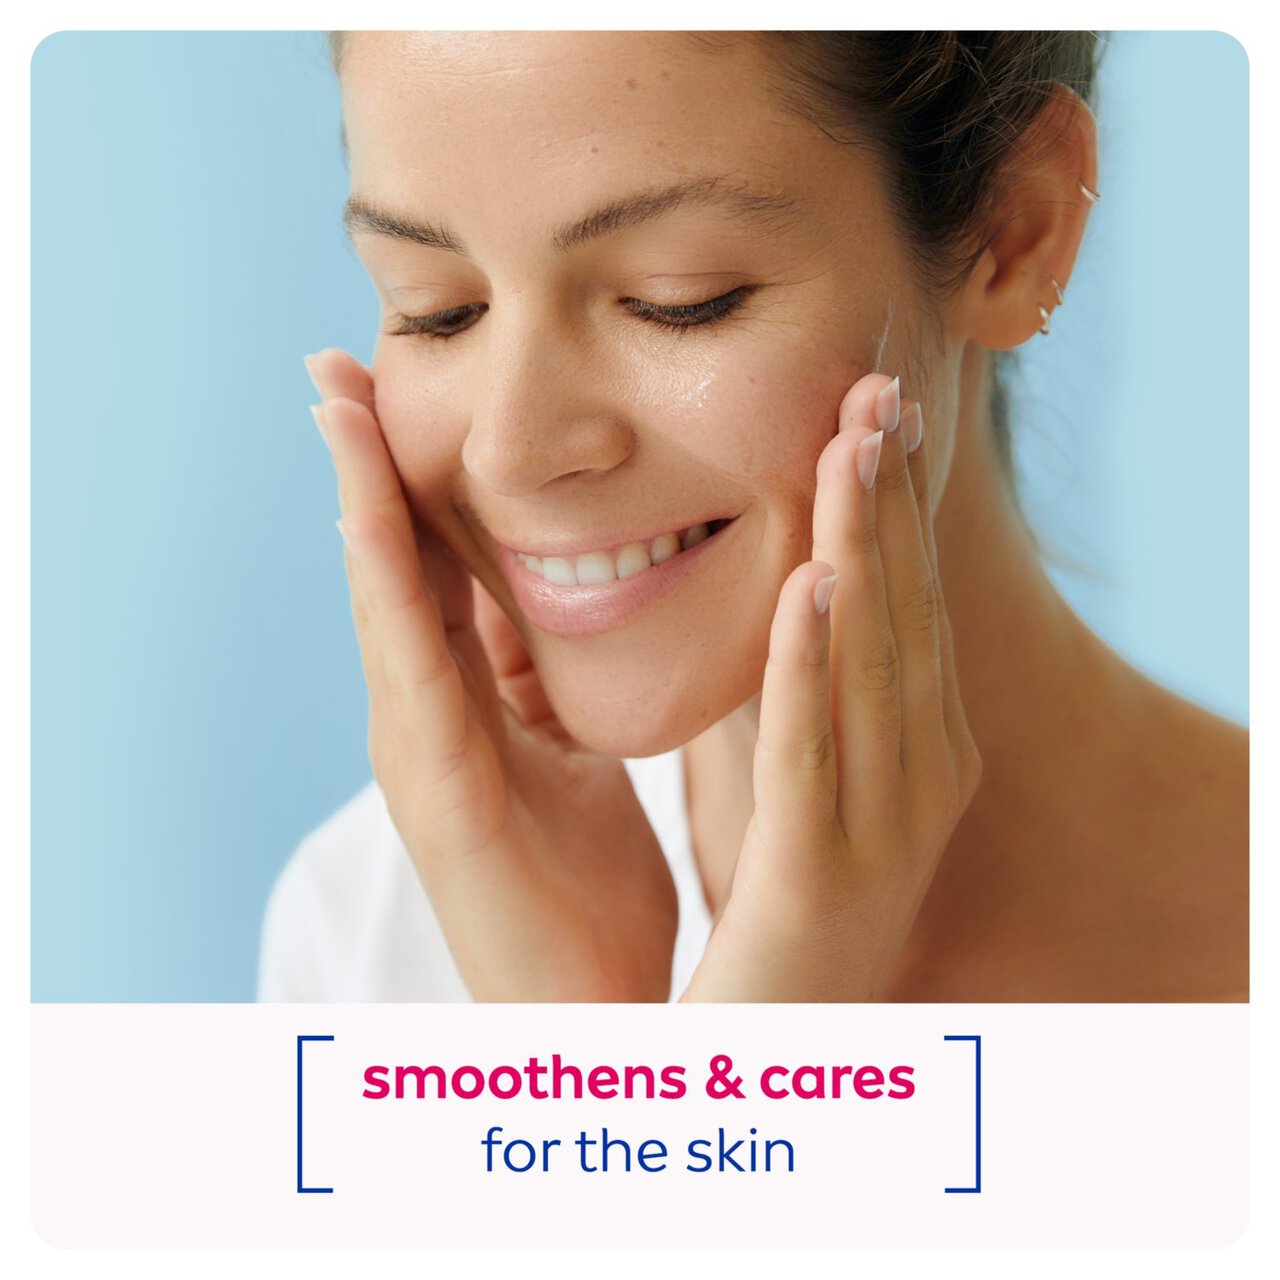 NIVEA Gentle Cream Face Wash for Dry Skin 150ml